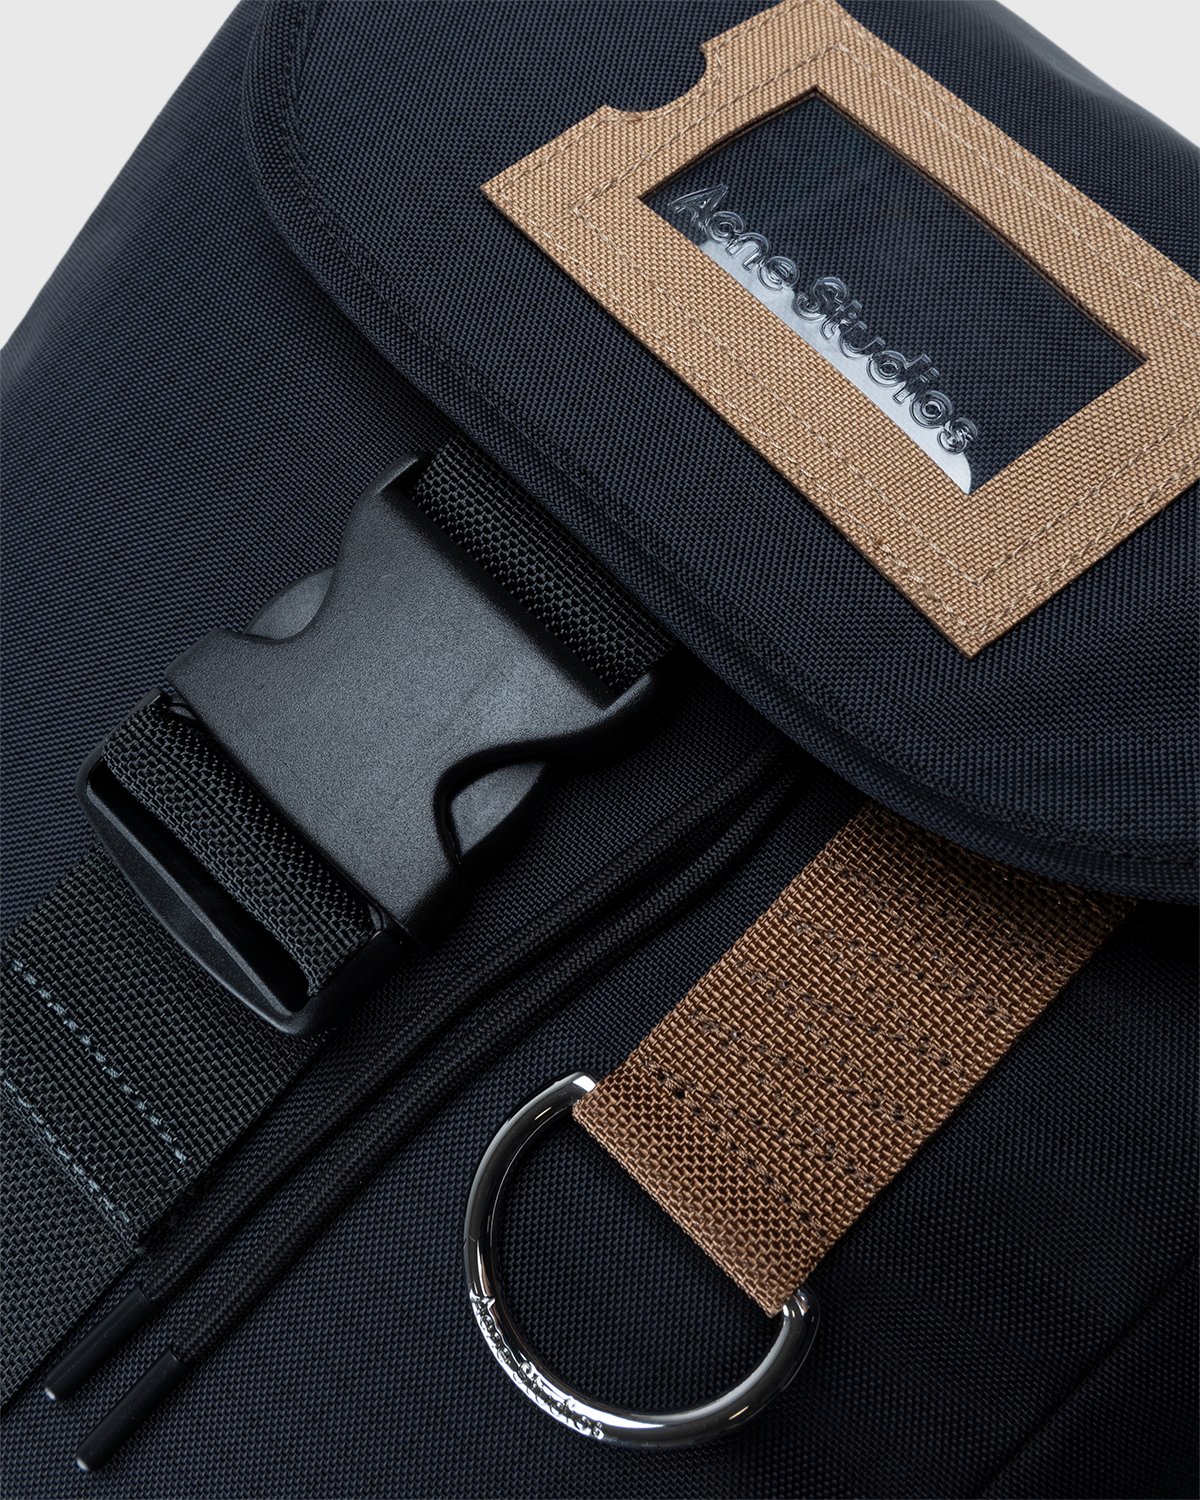 Acne Studios - Large Ripstop Backpack Black/Khaki Green - Accessories - Black - Image 5